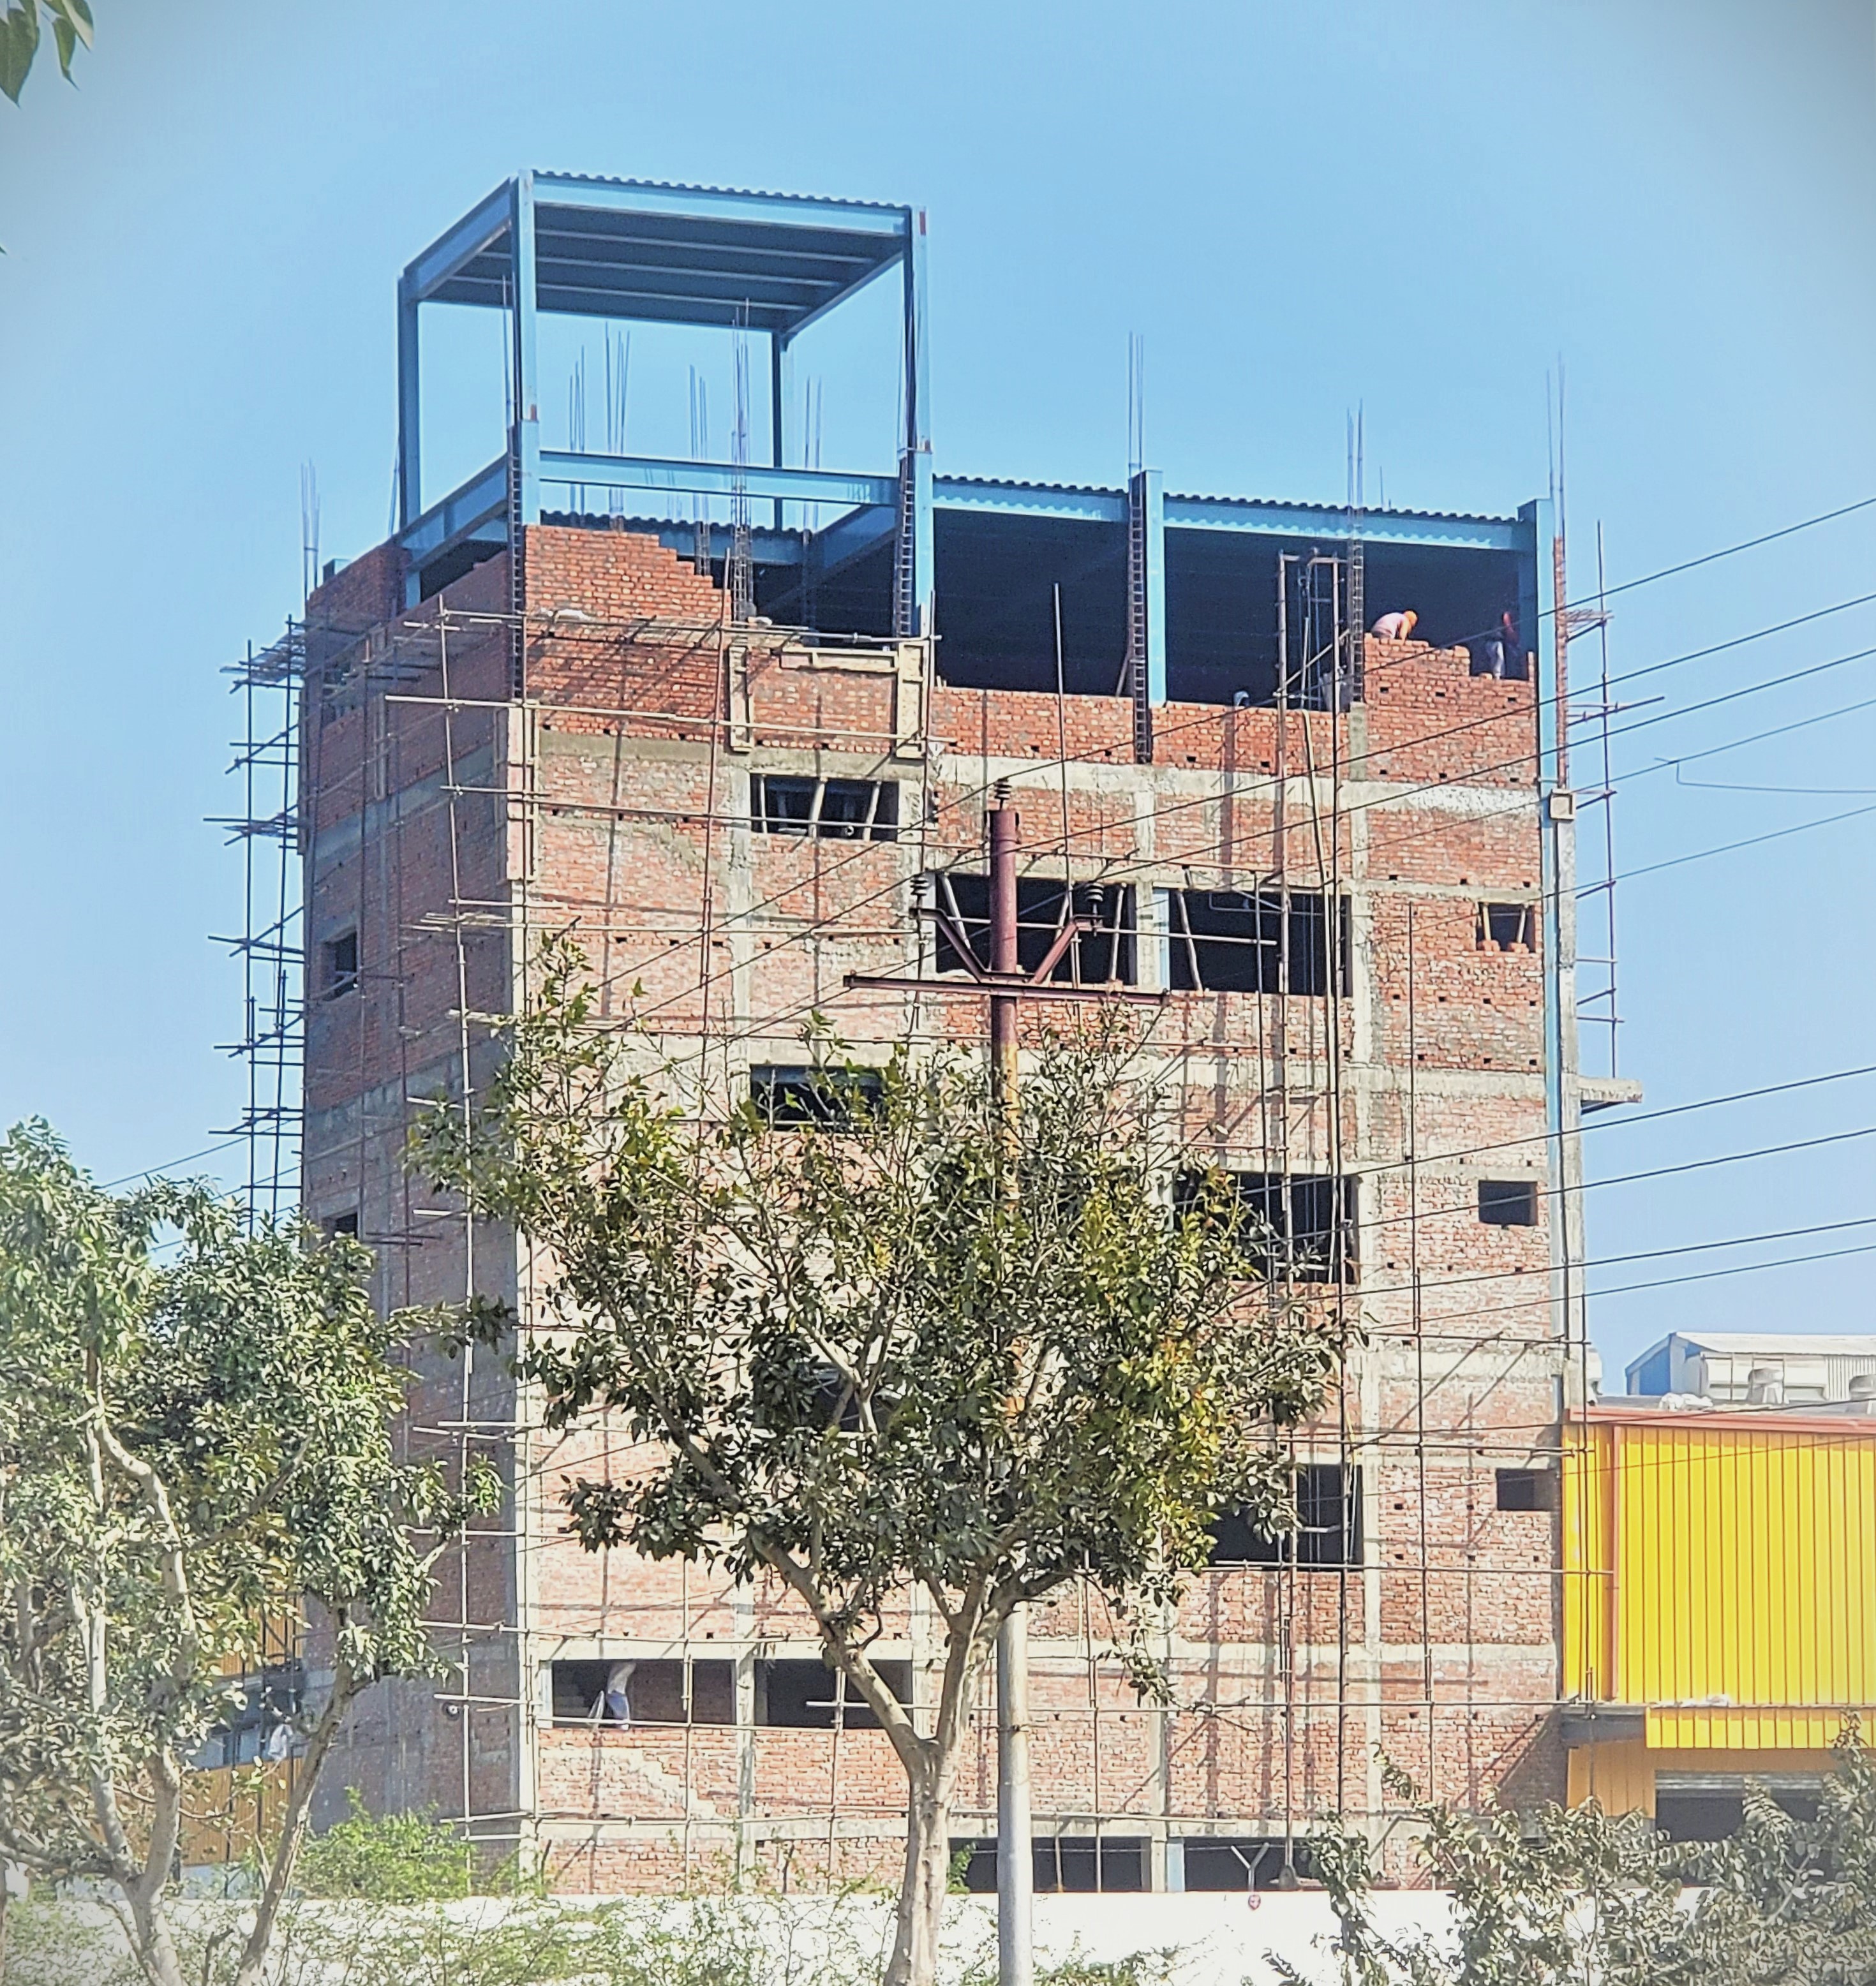 Medium-Rise Steel Buildings Construction in UP